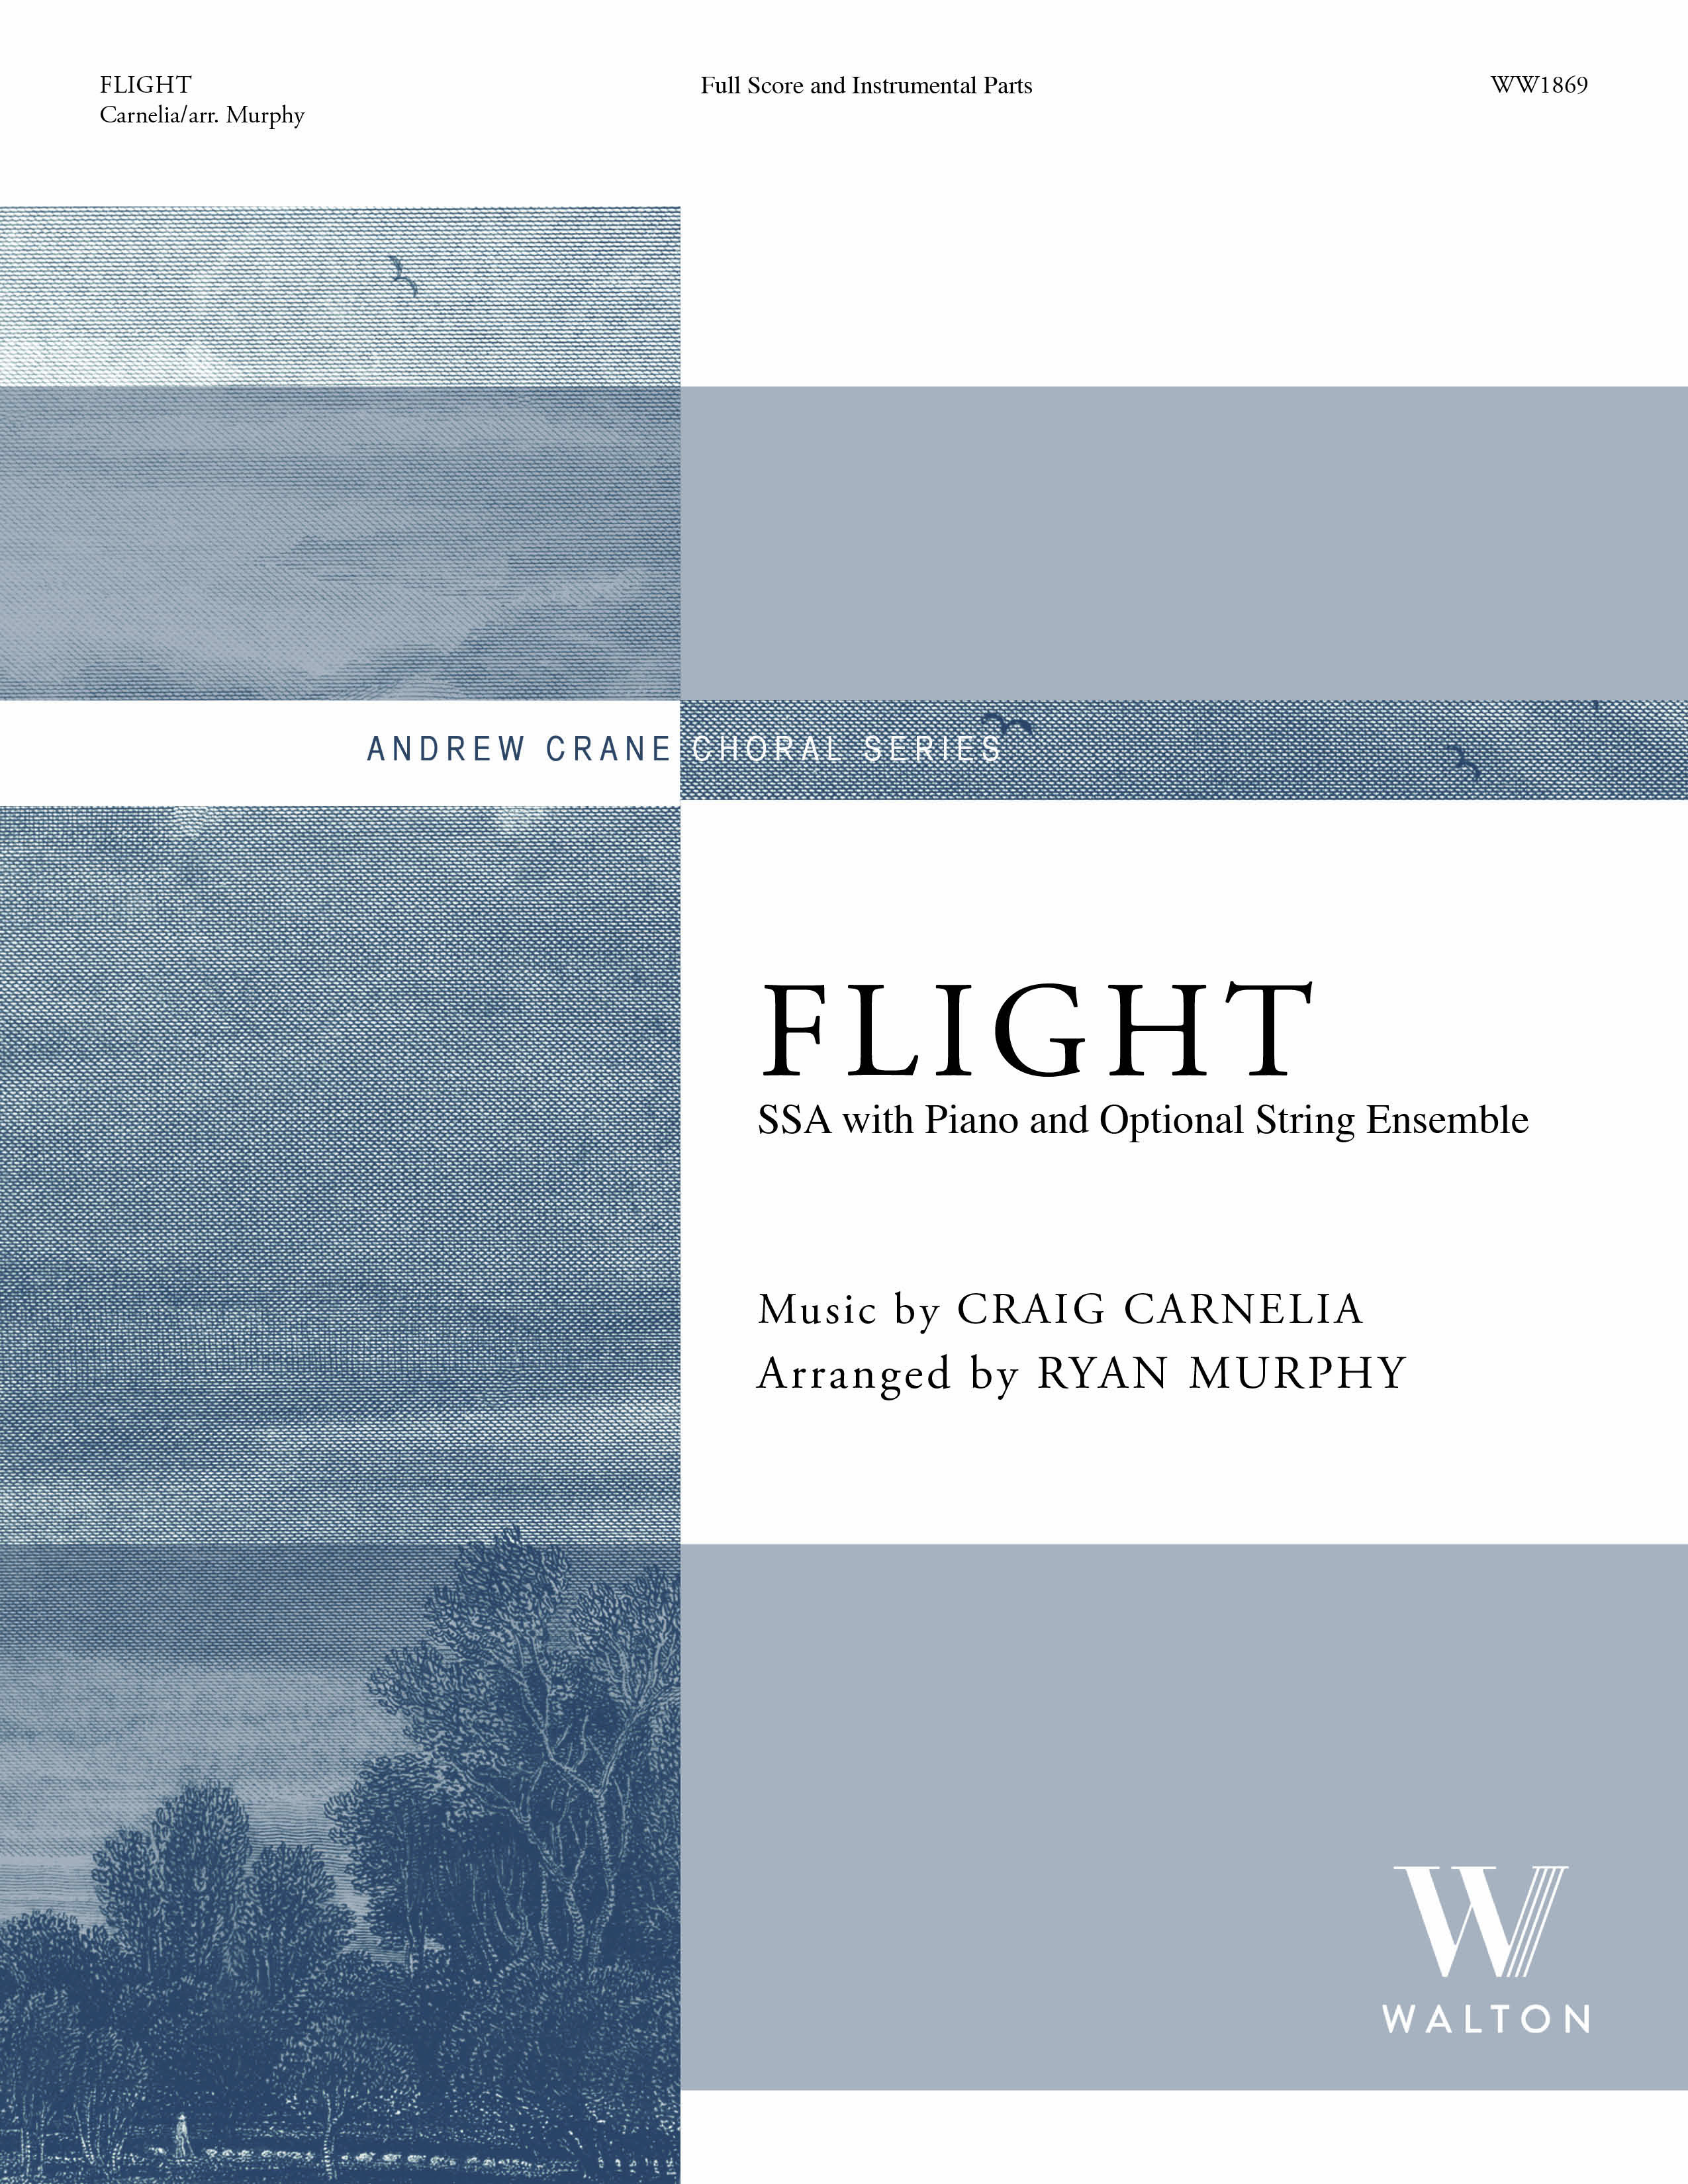 Craig Carnelia: Flight (Full Score & Parts): Upper Voices and Accomp.: Score &